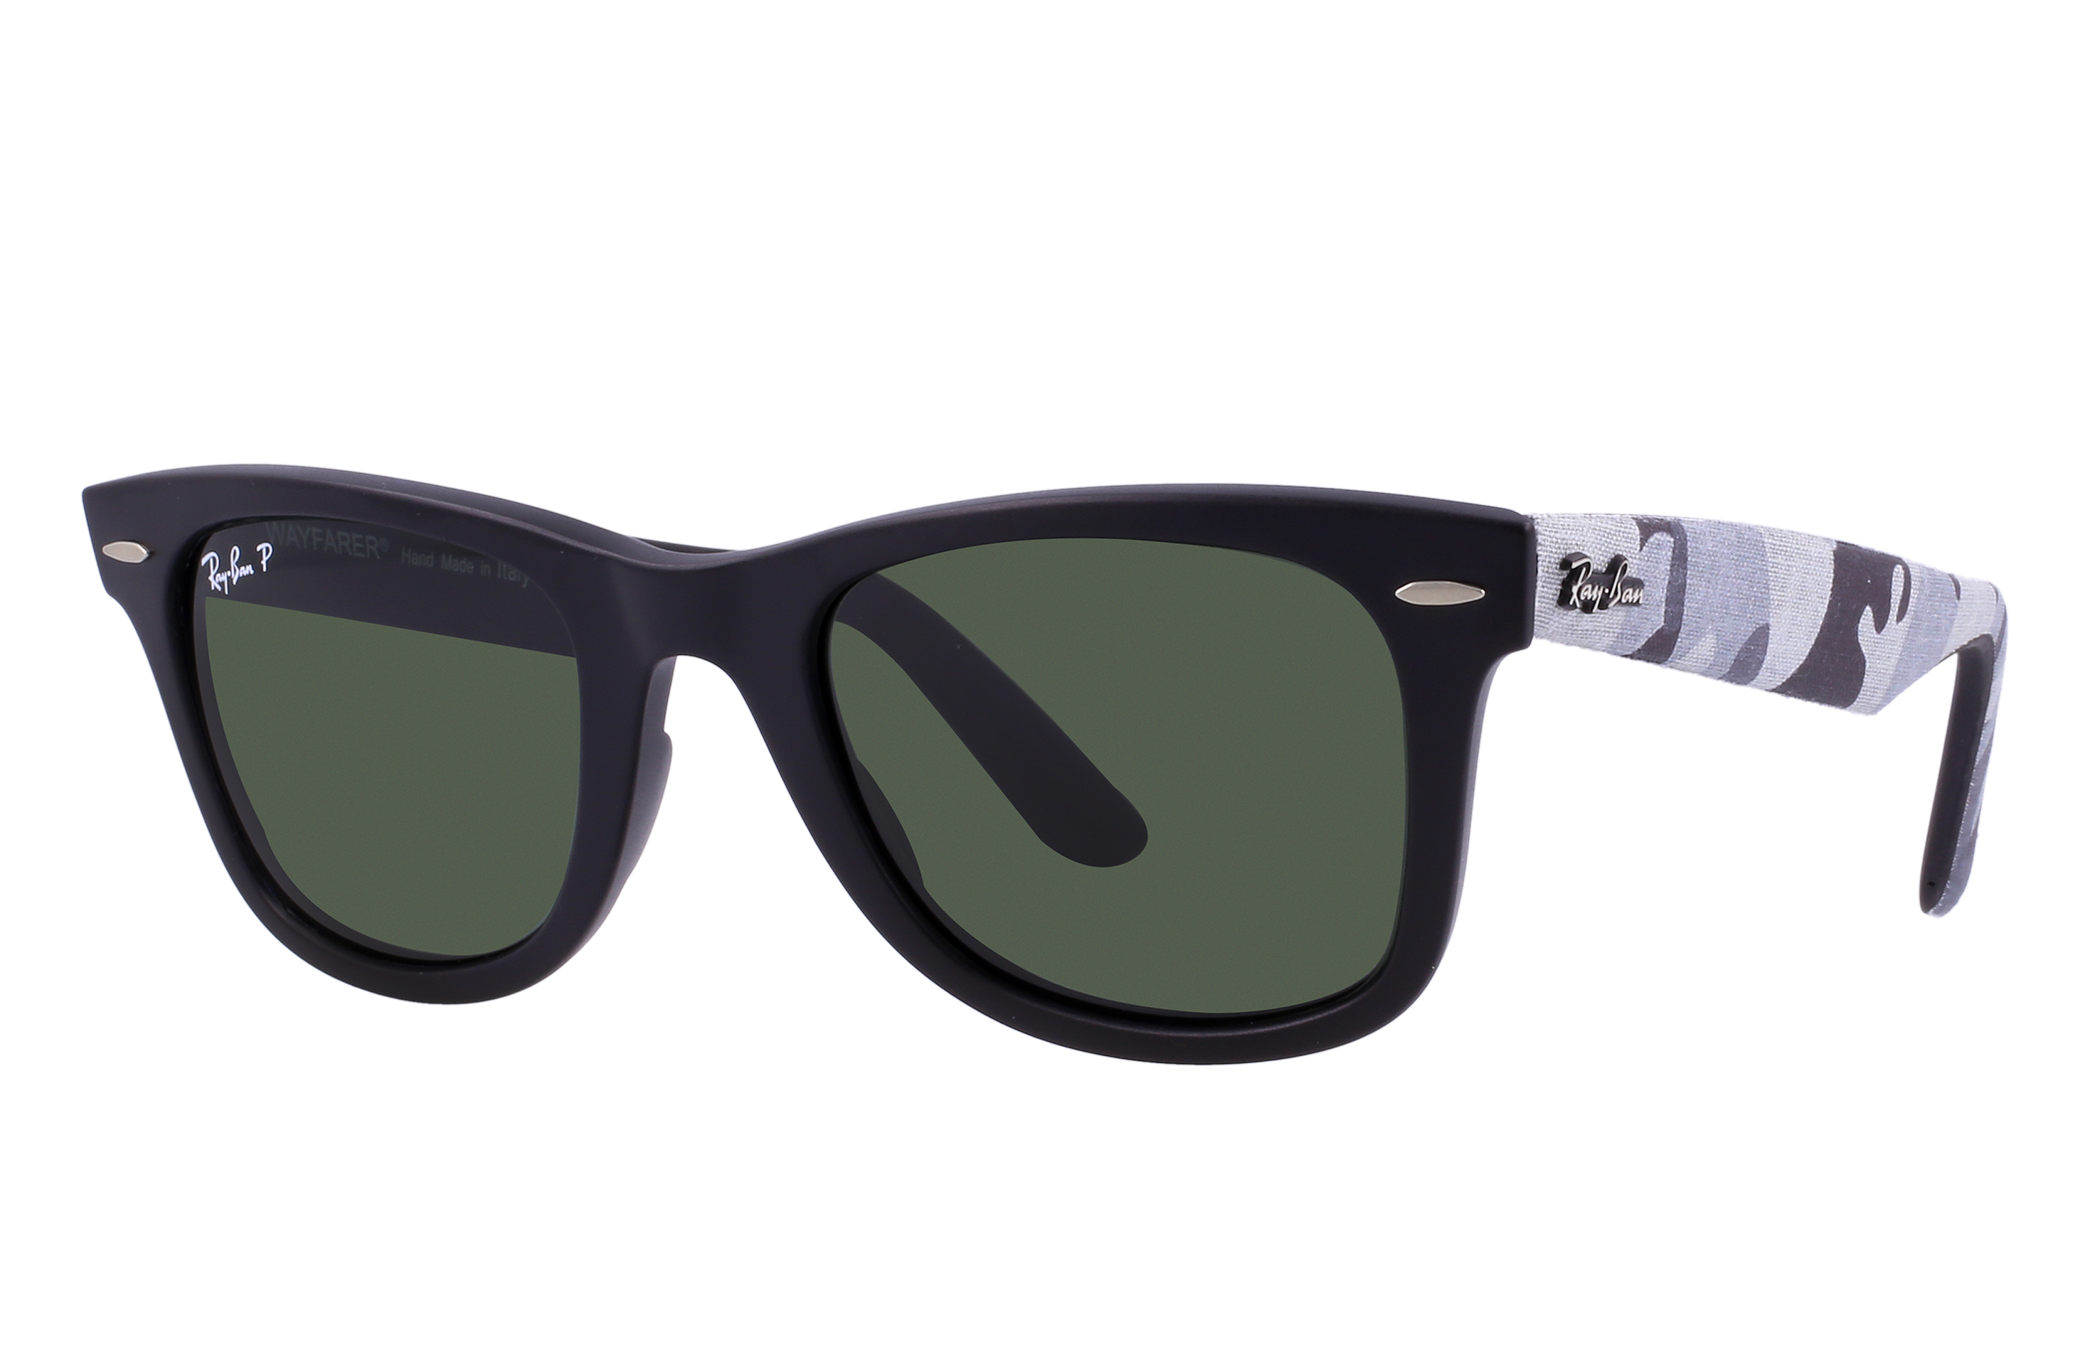 Wayfarer Sunglasses in Matte Black and Green | Ray-Ban®